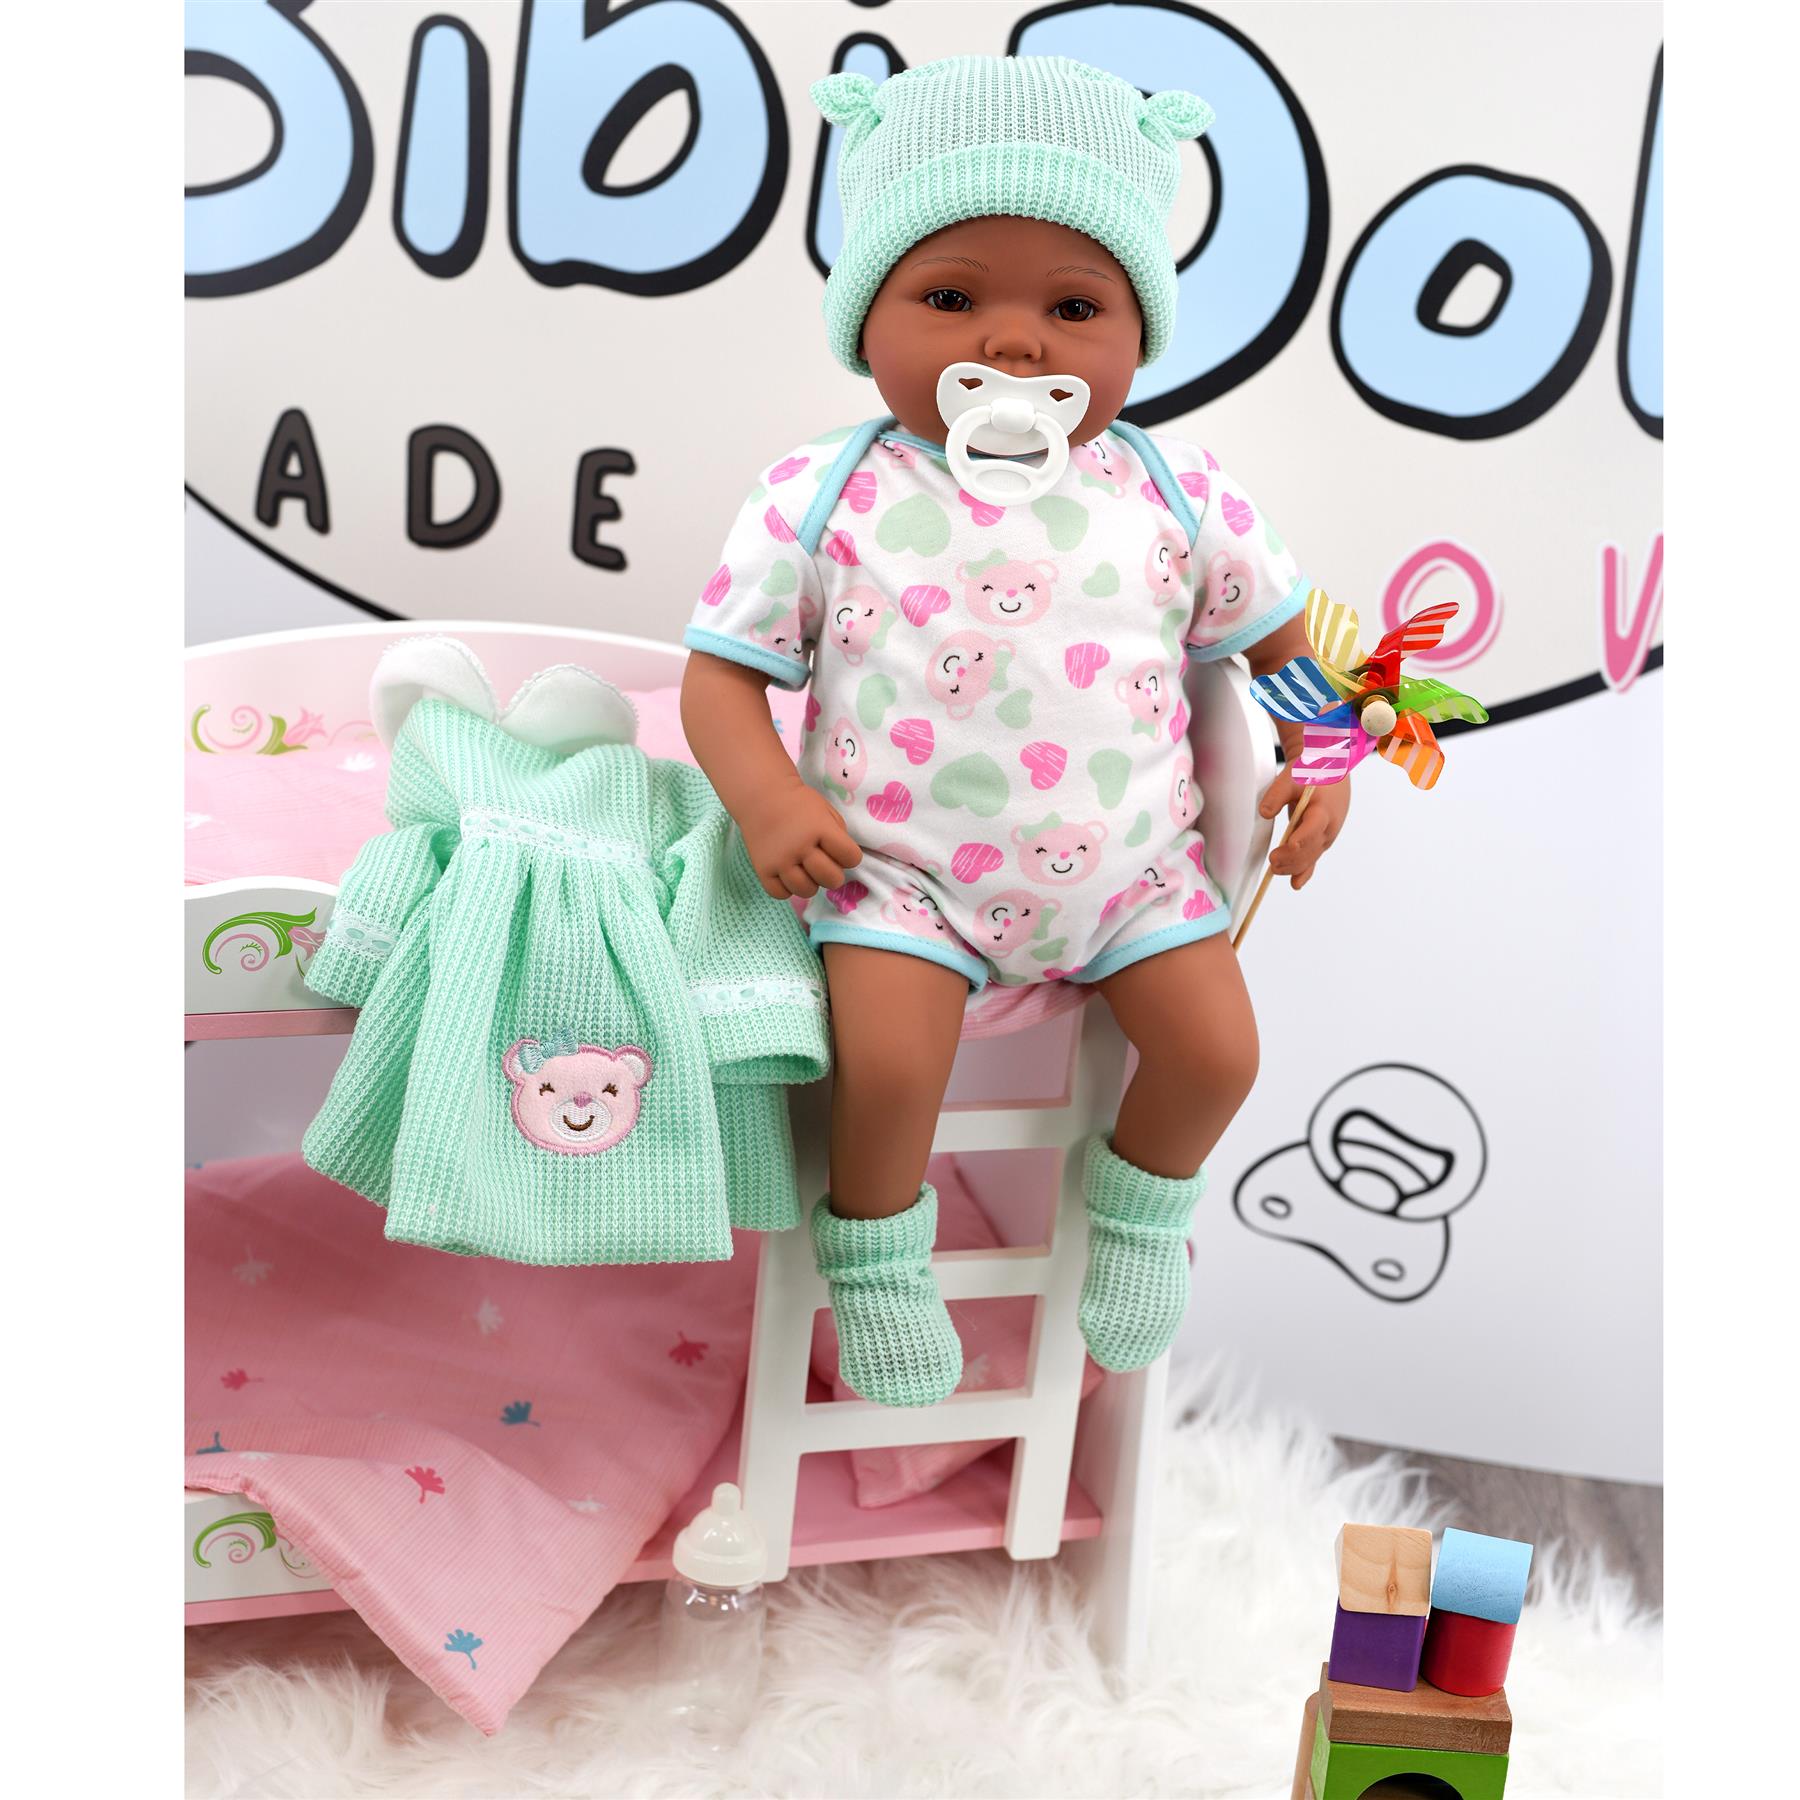 BiBi Outfits - Reborn Doll Clothes (Mint Dress) (50 cm / 20") by BiBi Doll - The Magic Toy Shop